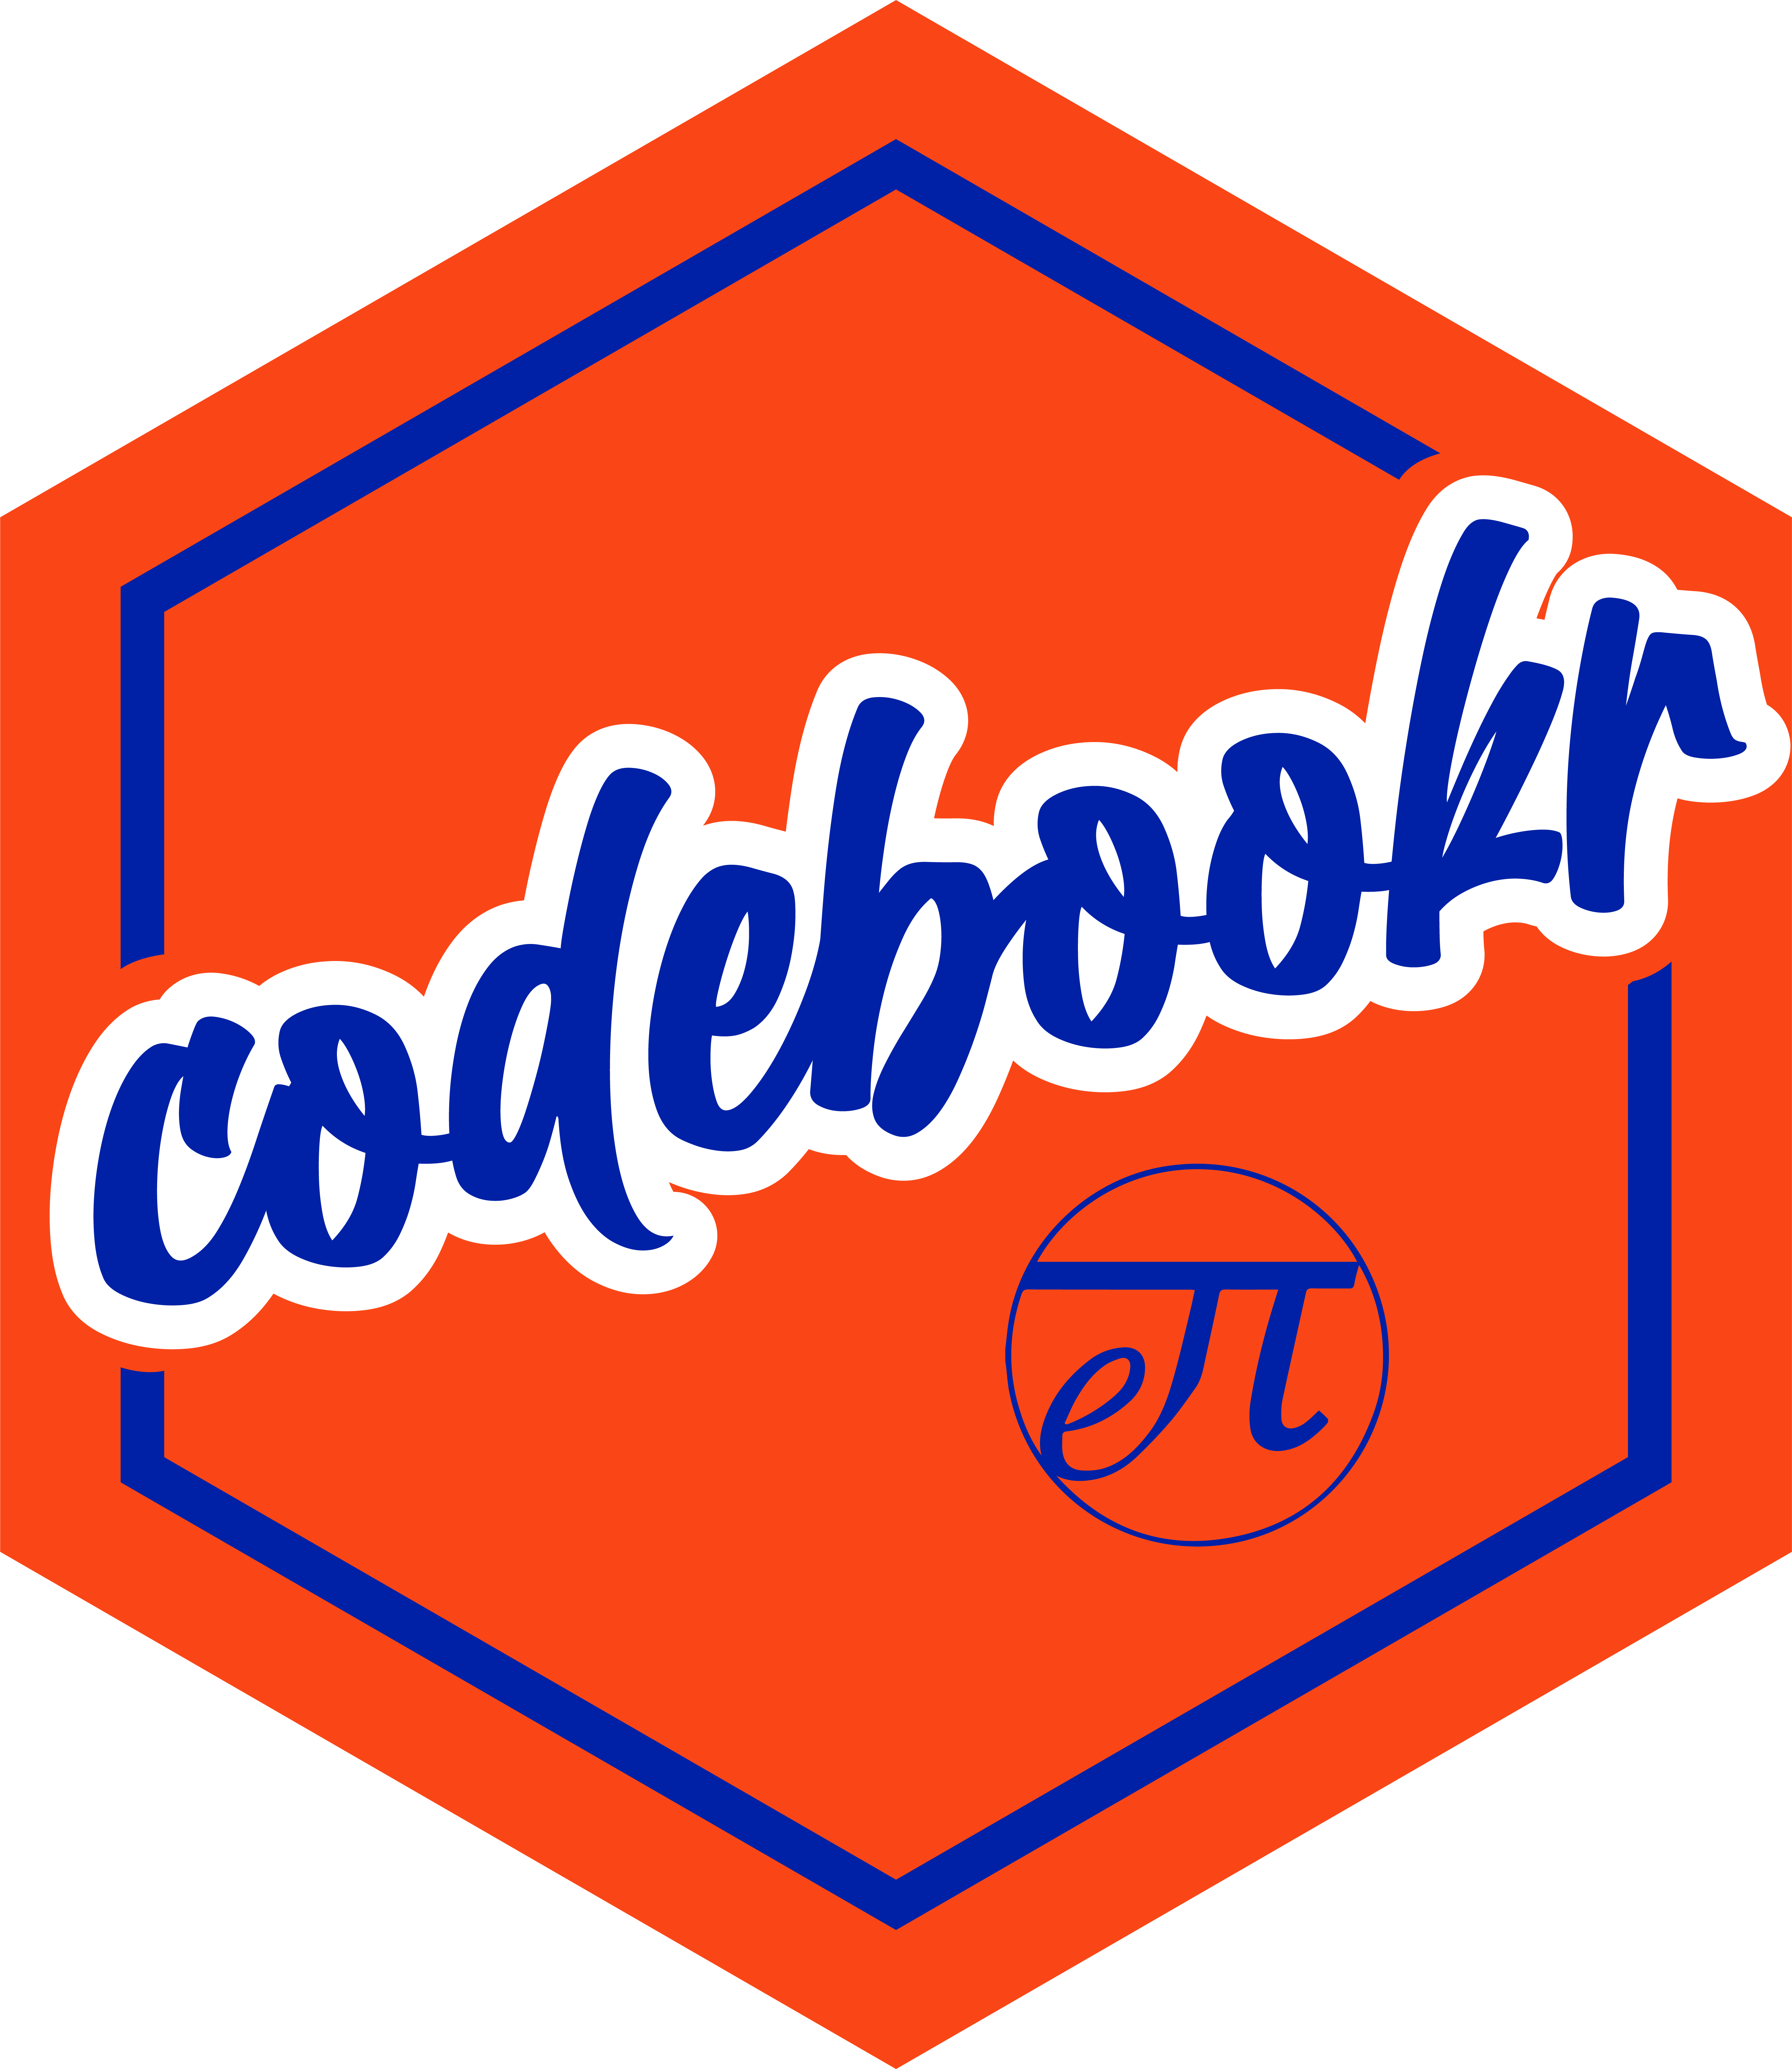 codebookr hex logo